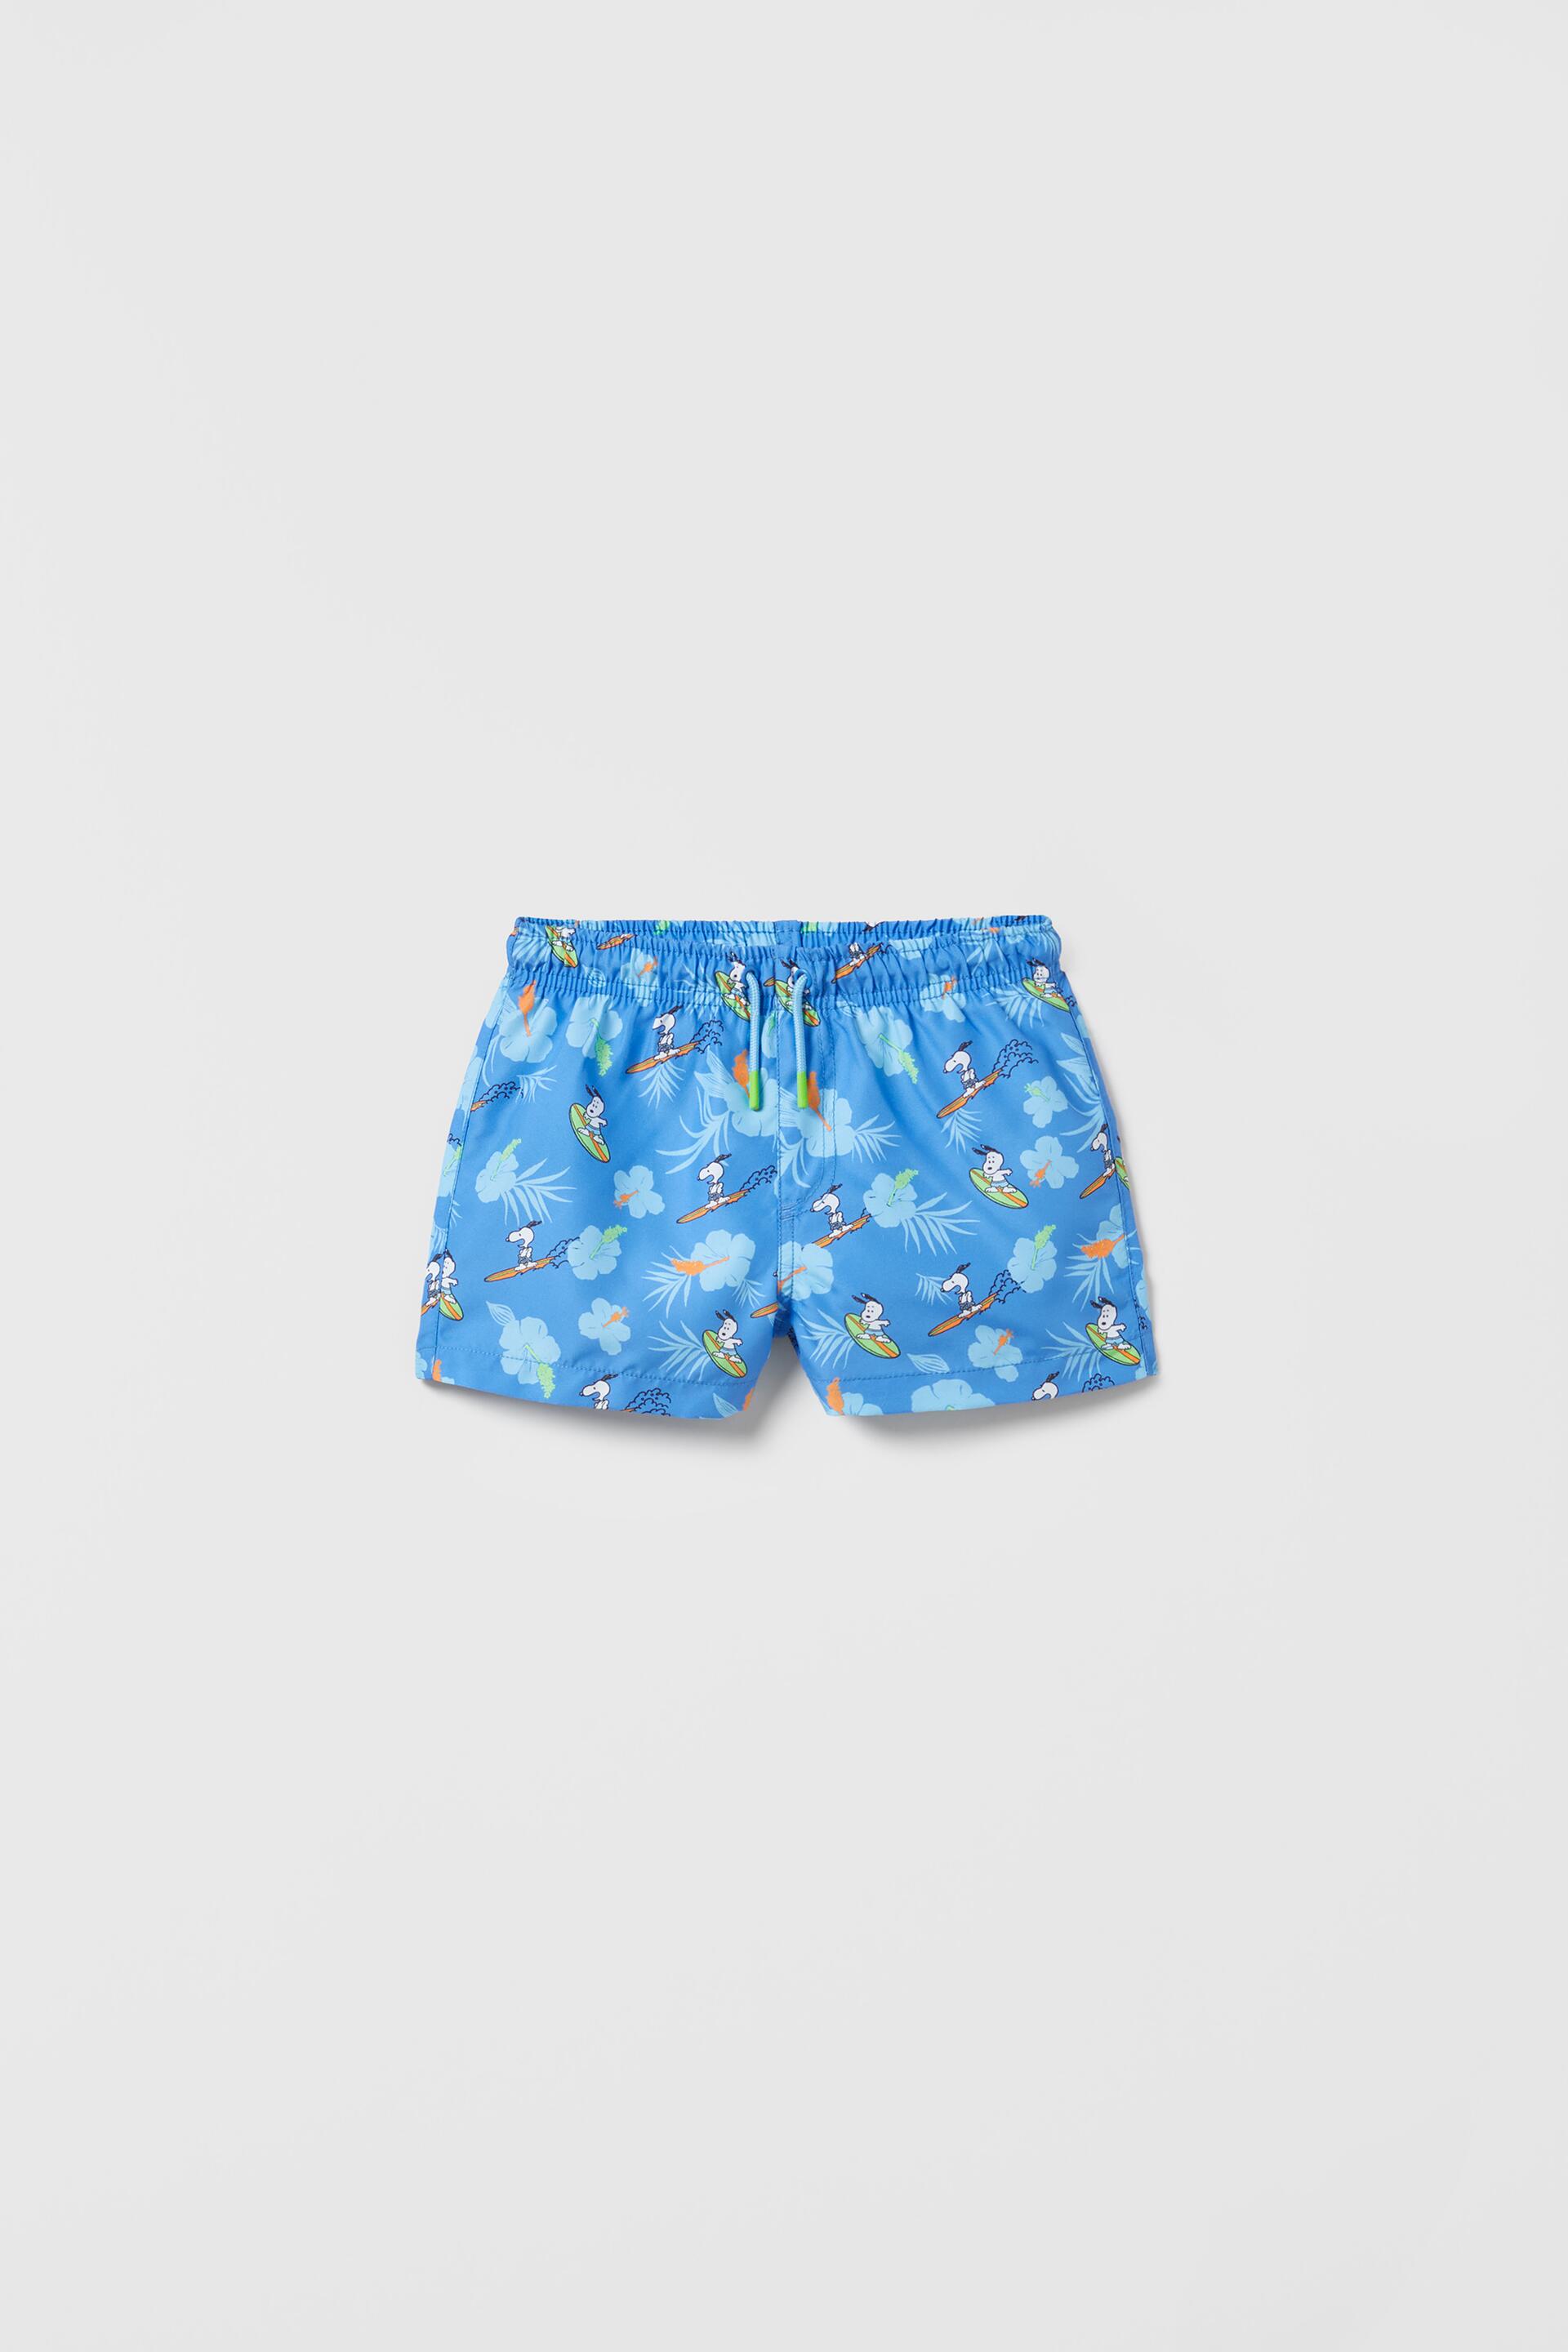 Zara Kids/ Snoopy Peanuts™ Swimsuit - Big Apple Buddy